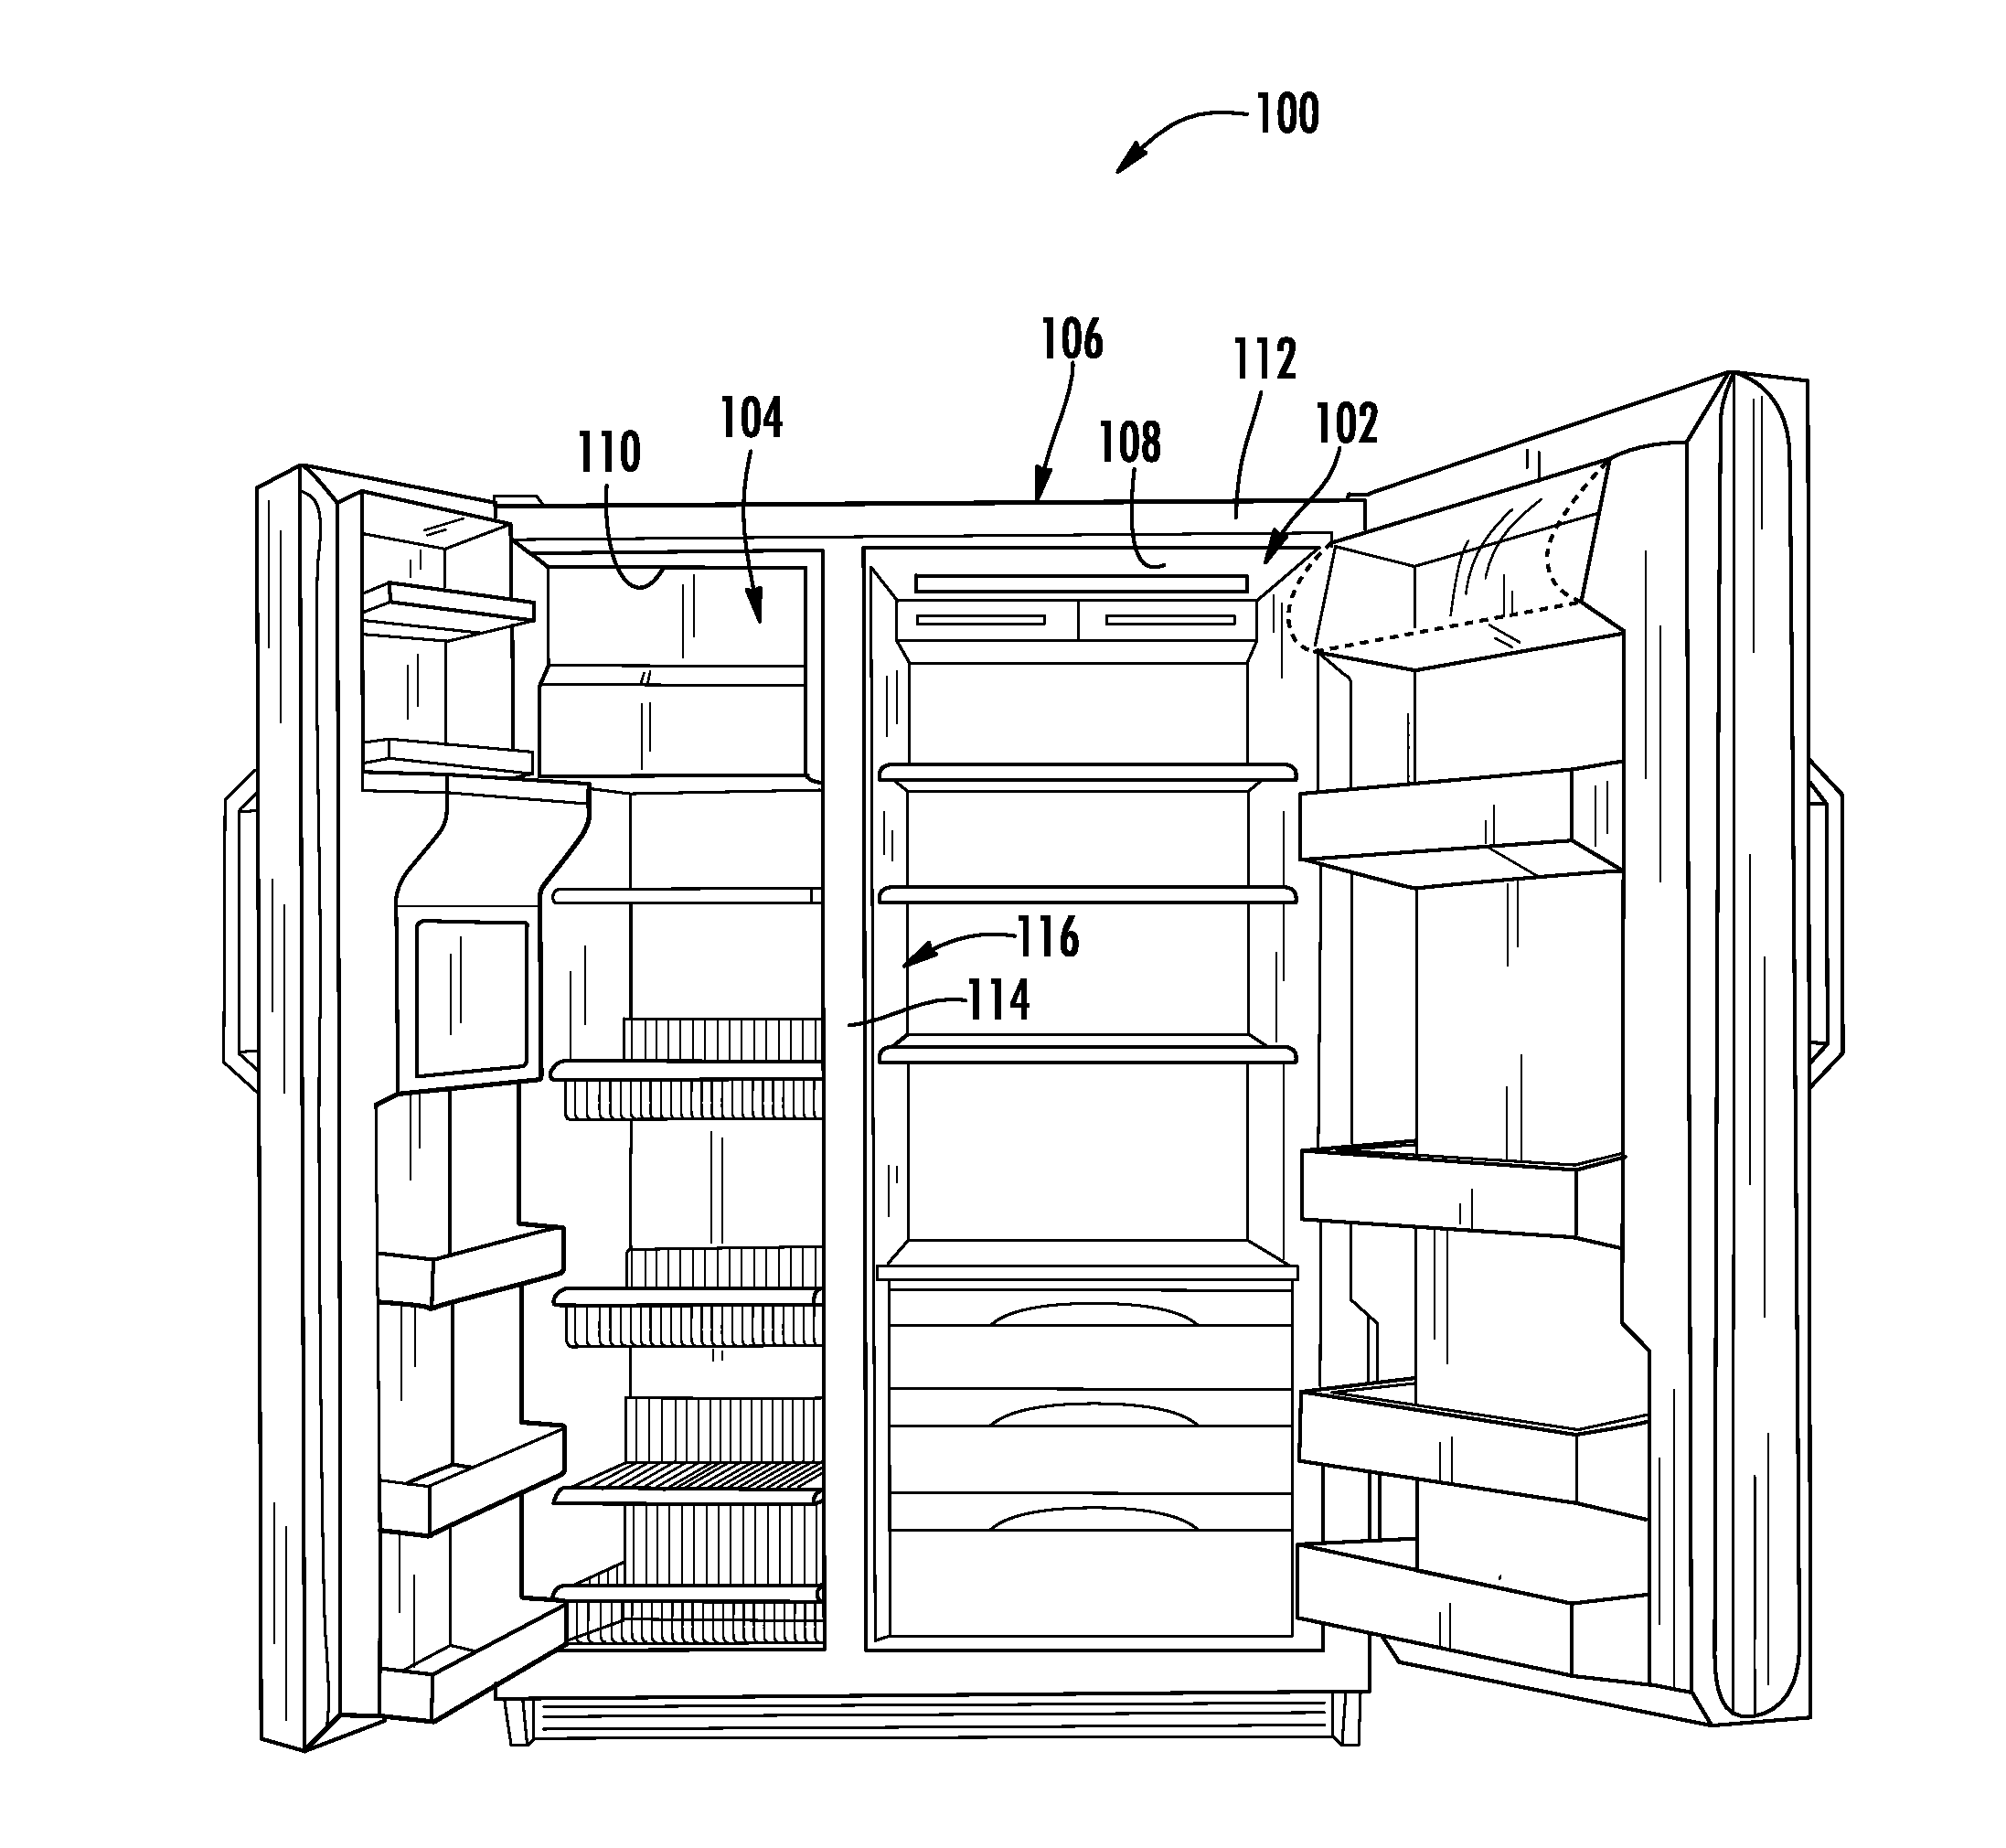 Integrated vacuum insulation panel